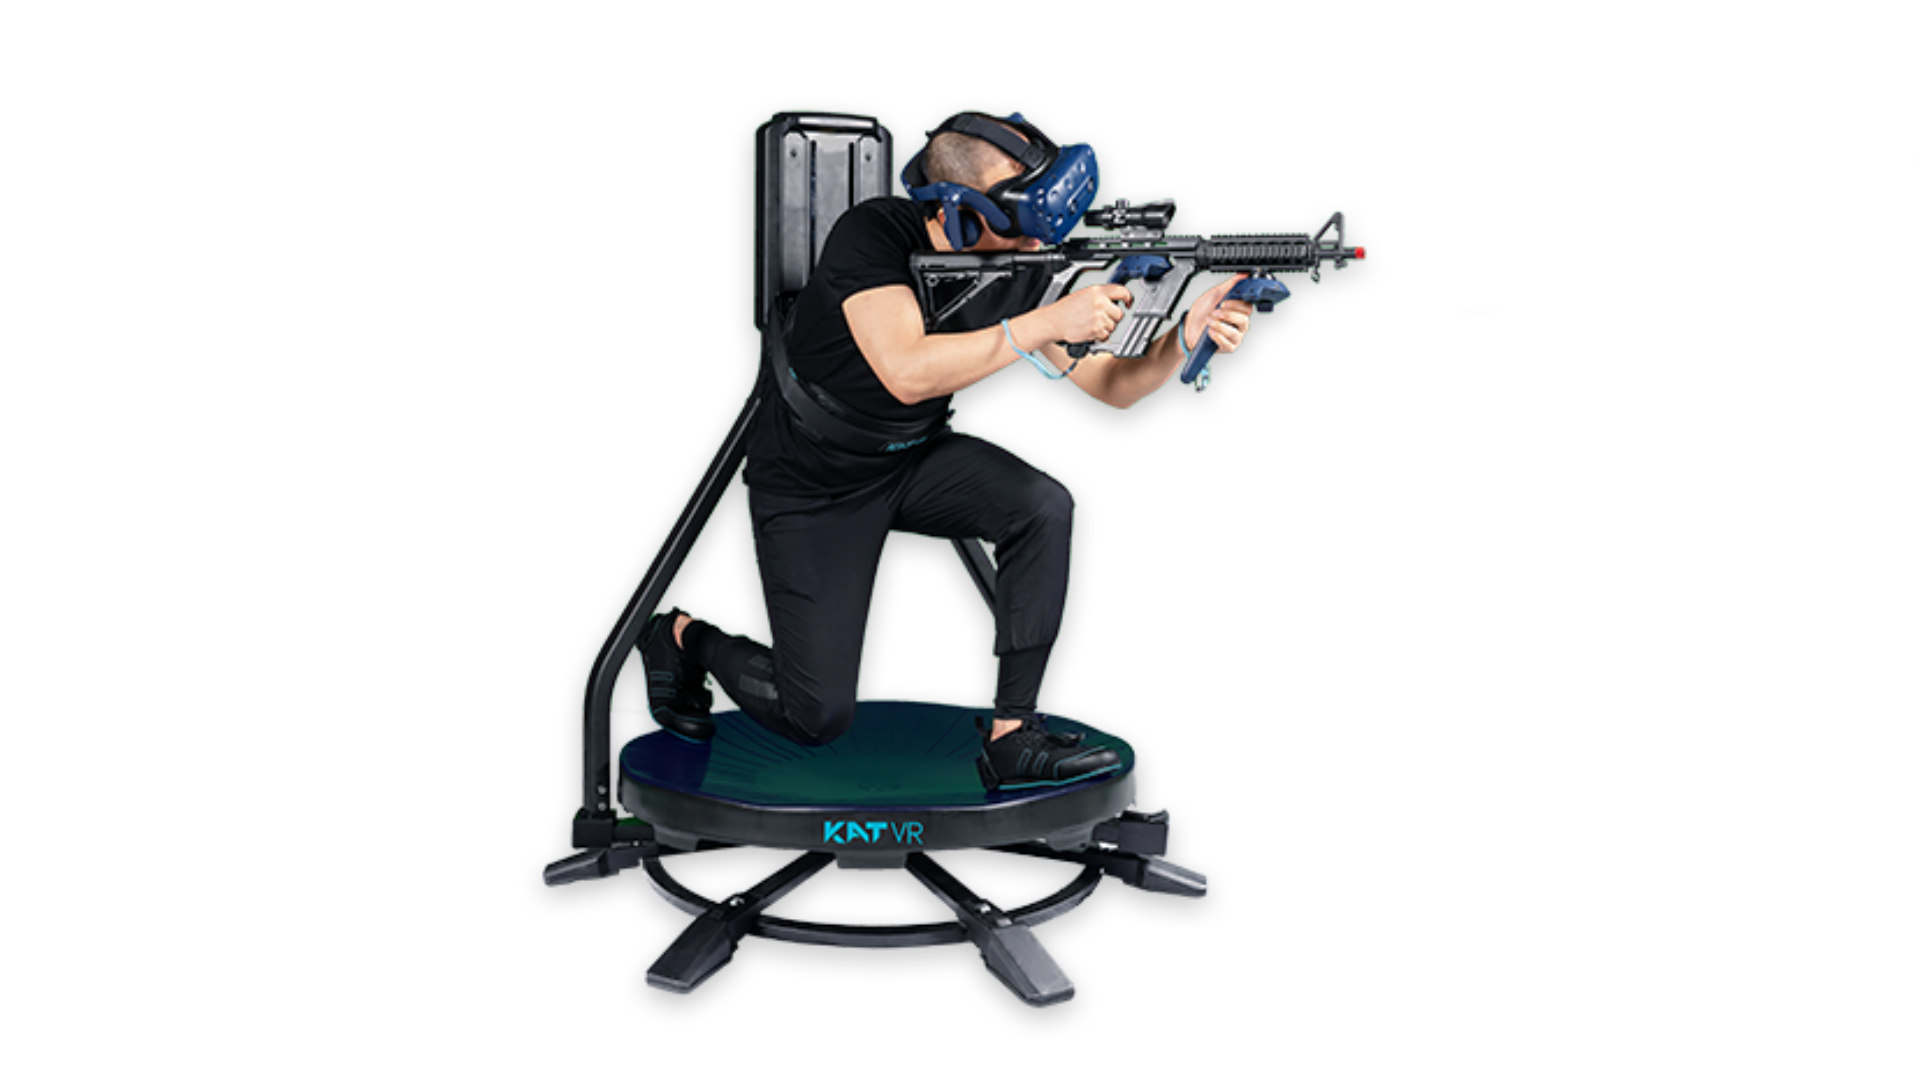 Kat VR Announces Kickstarter for At-home VR Treadmill 'KAT WALK C